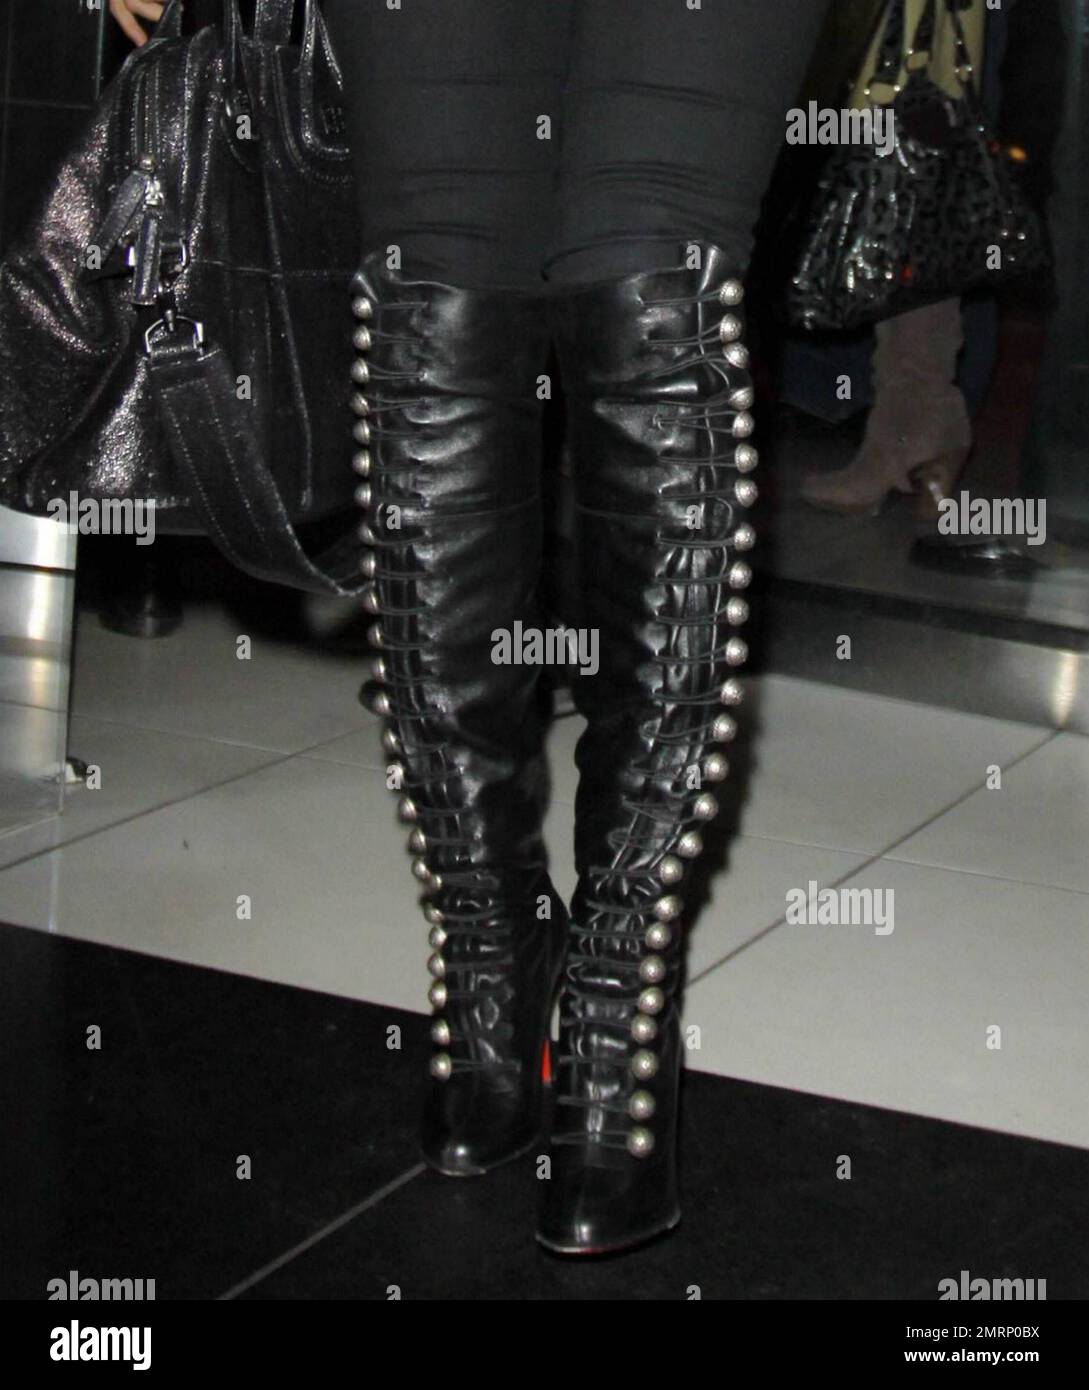 Shakira in Christian Louboutin thigh-high leather boots : r/shakira